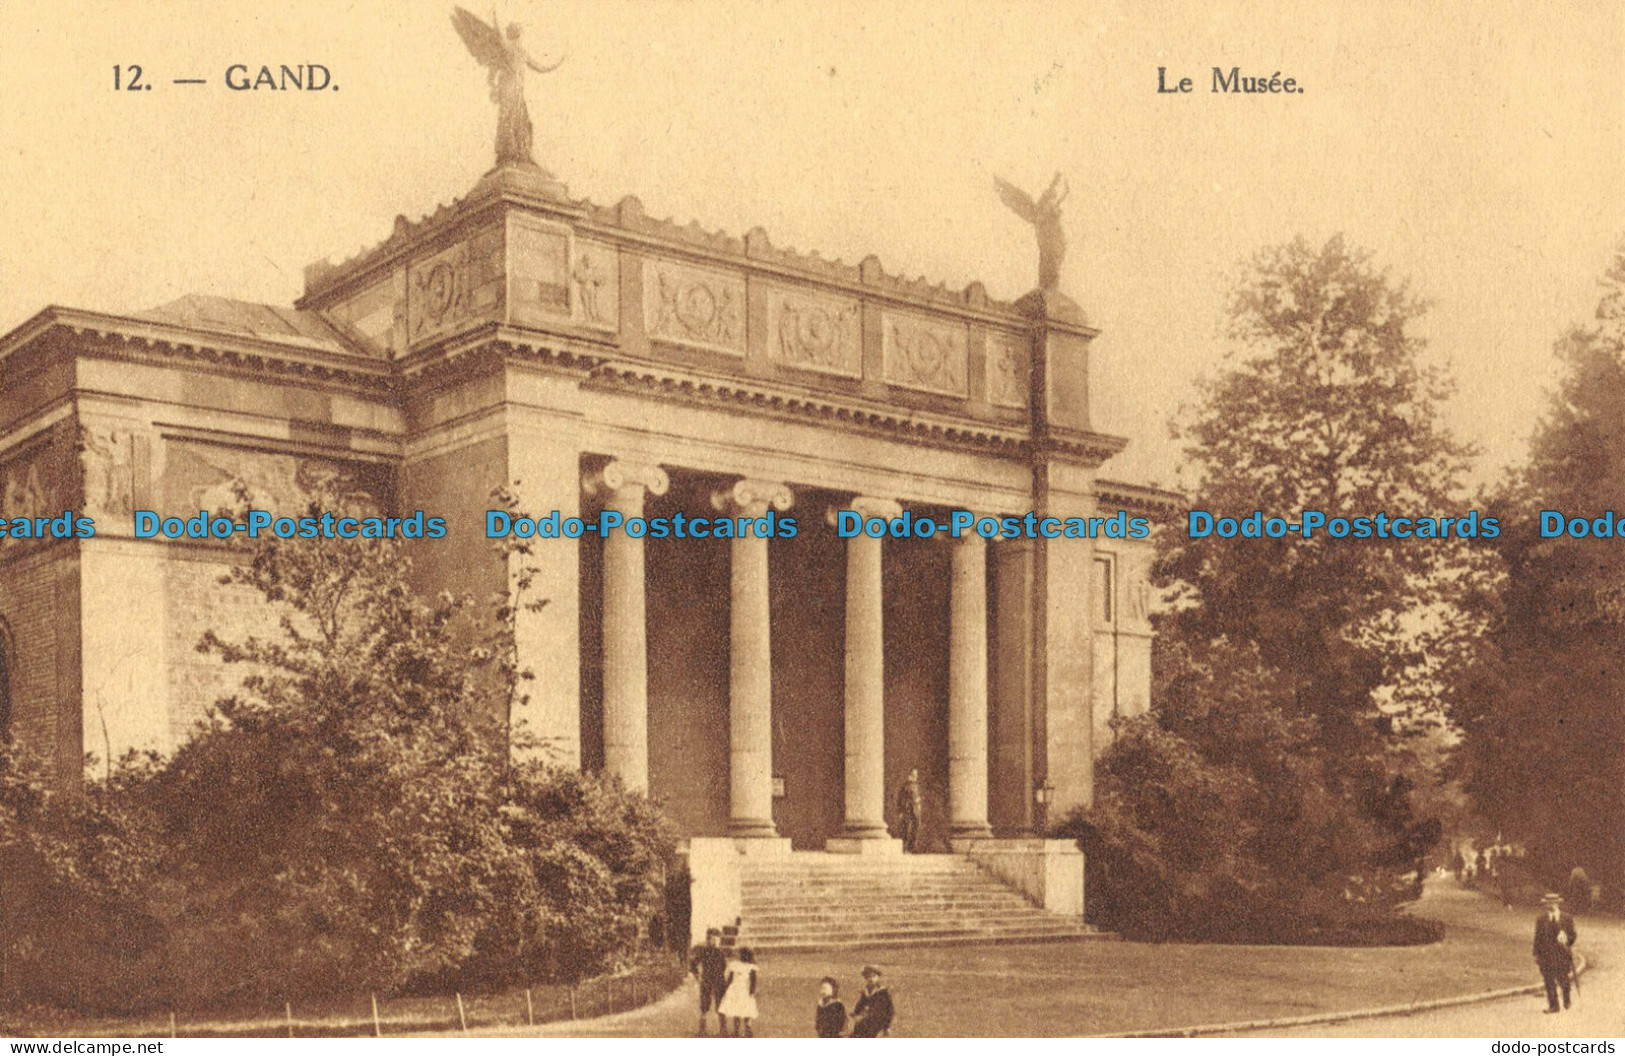 R053797 Gand. Le Musee. Marco Marcovici. No 12 - Monde